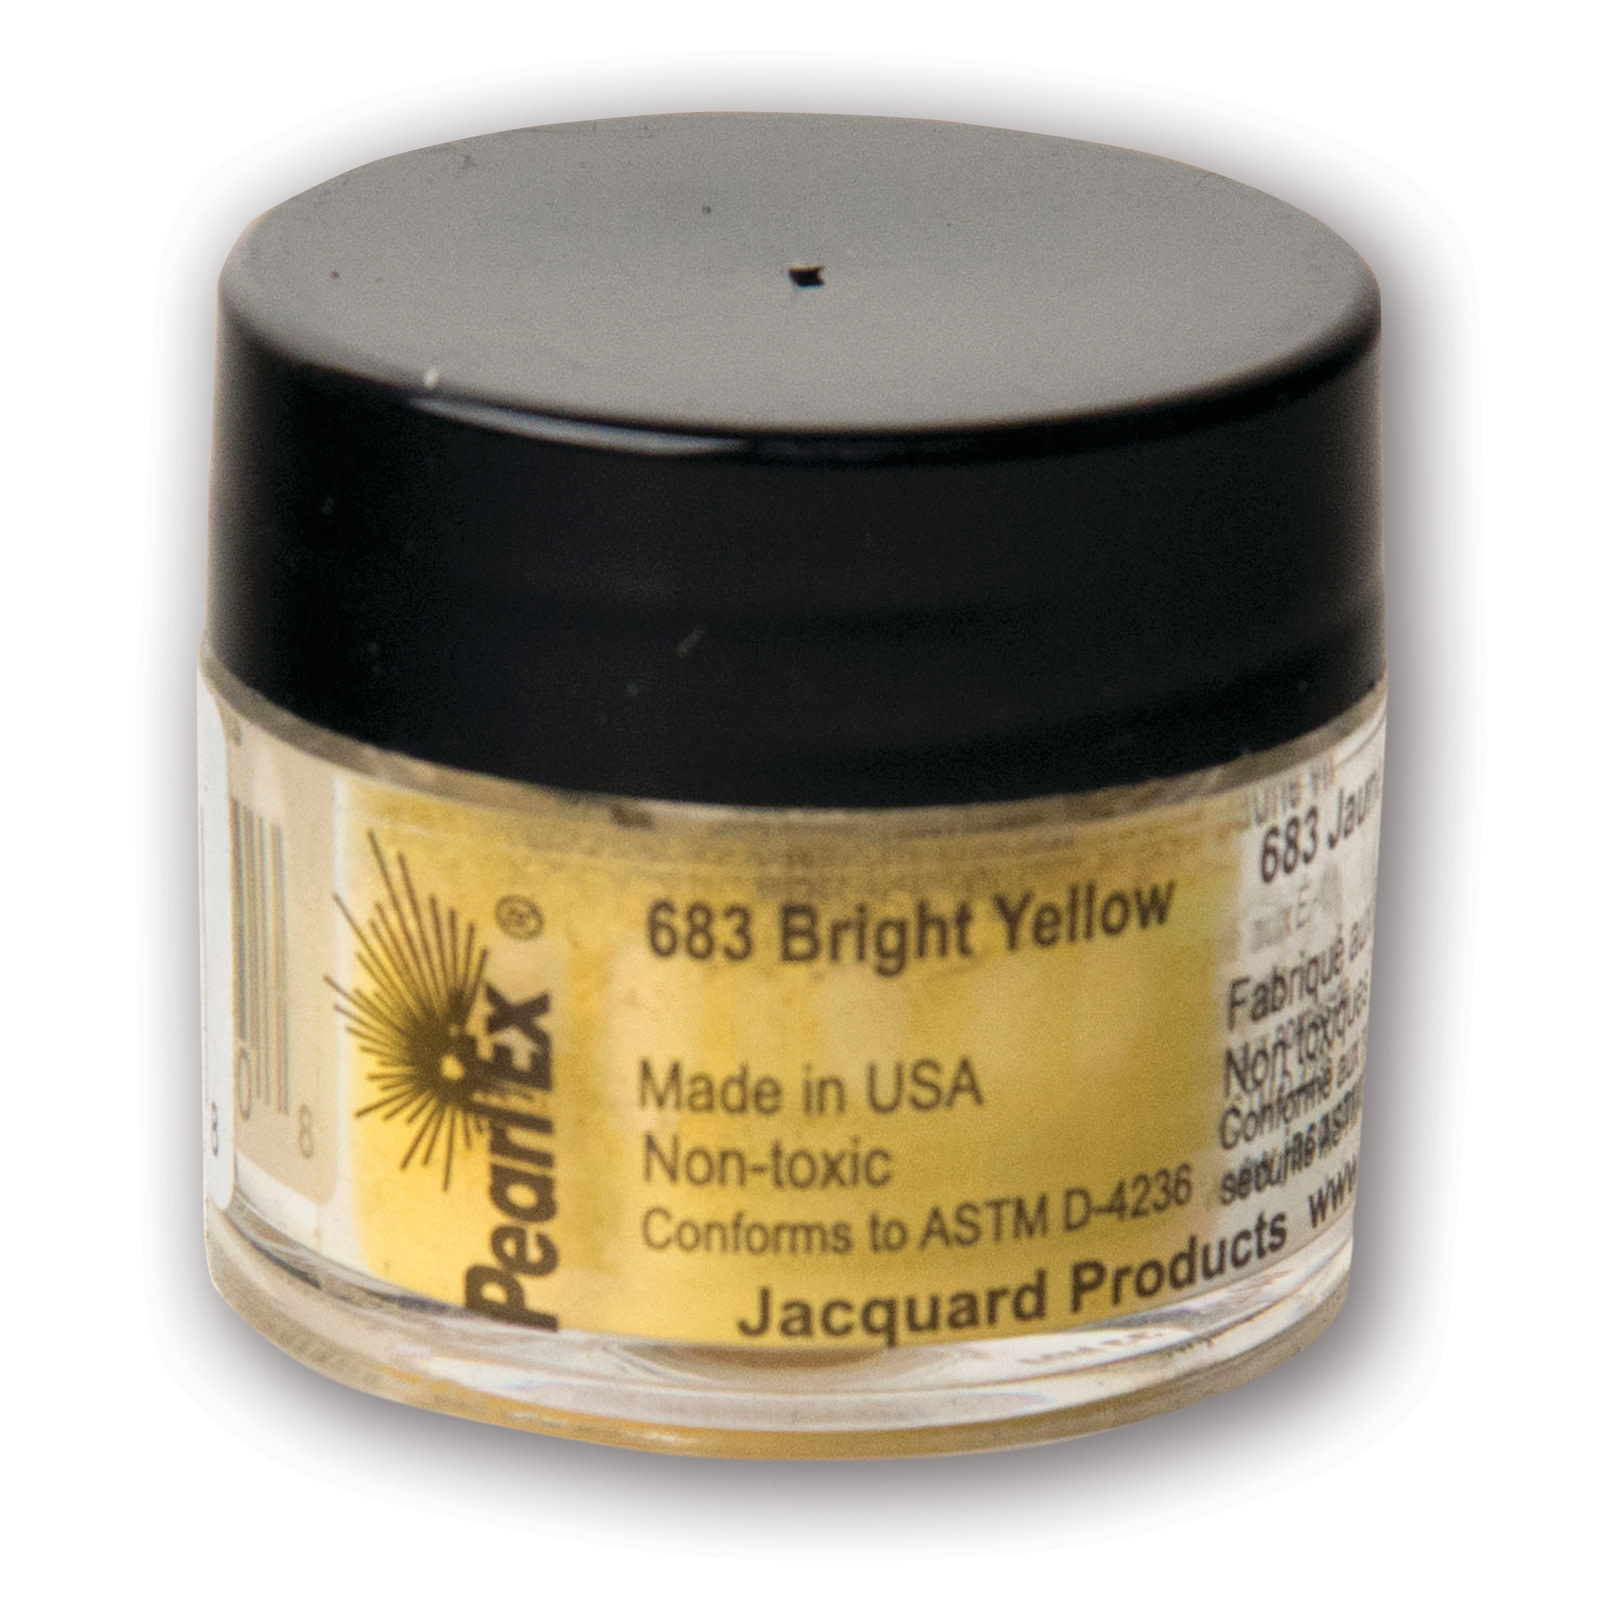 Jacquard Pearl Ex Powdered Pigments, 3g Jars, Bright Yellow